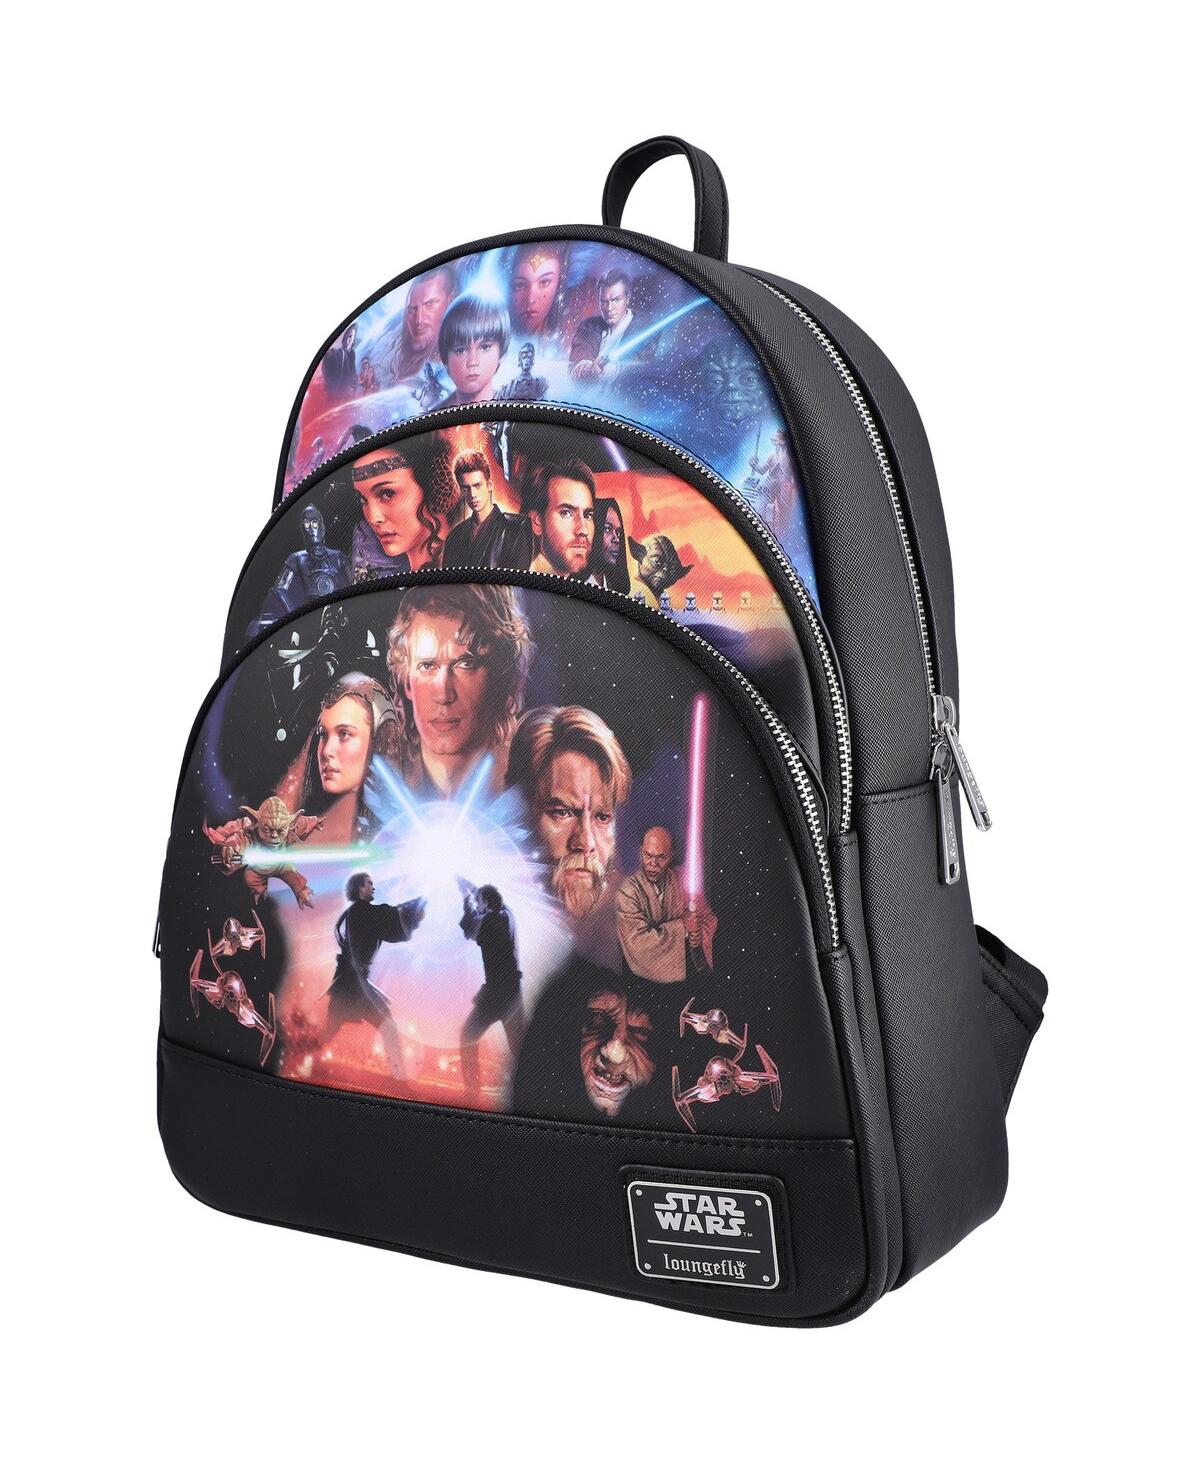 Star Wars Prequel Trilogy Triple Pocket Mini Backpack - Black